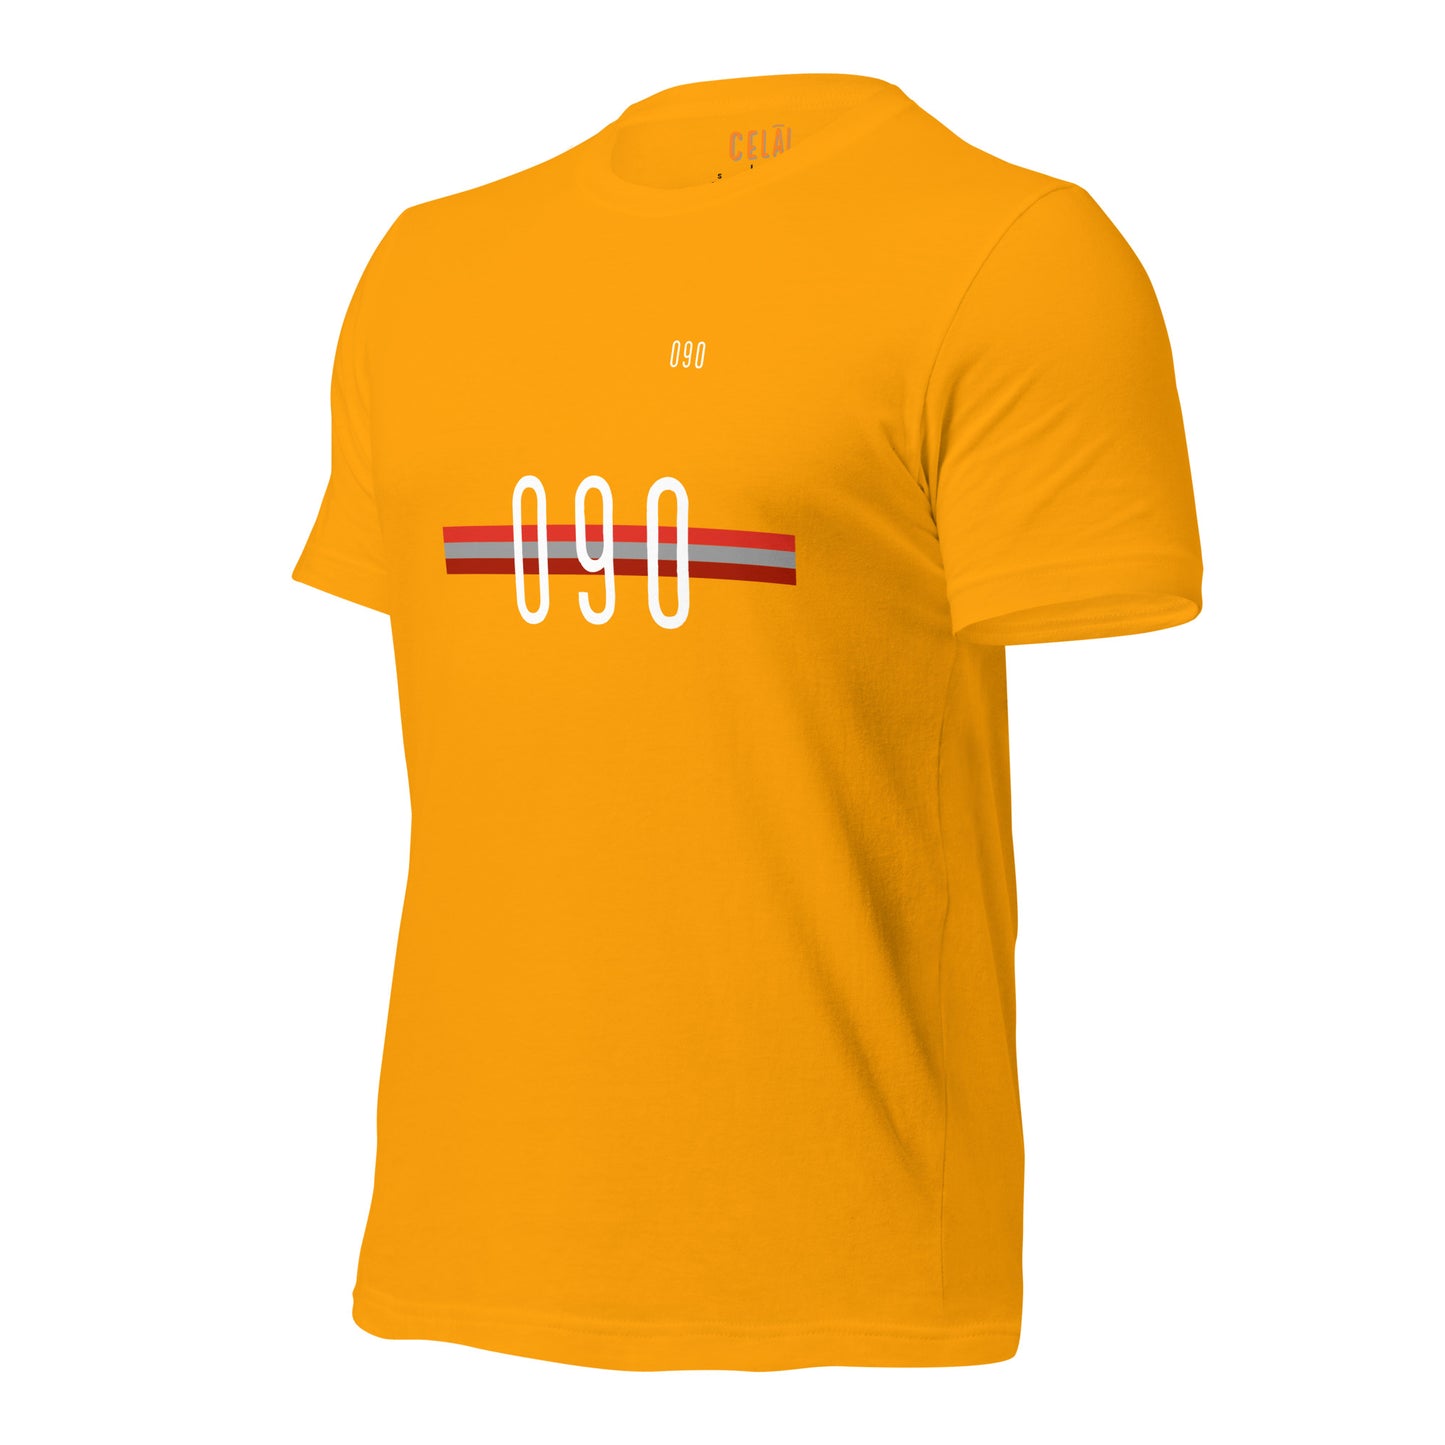 090 Unisex t-shirt